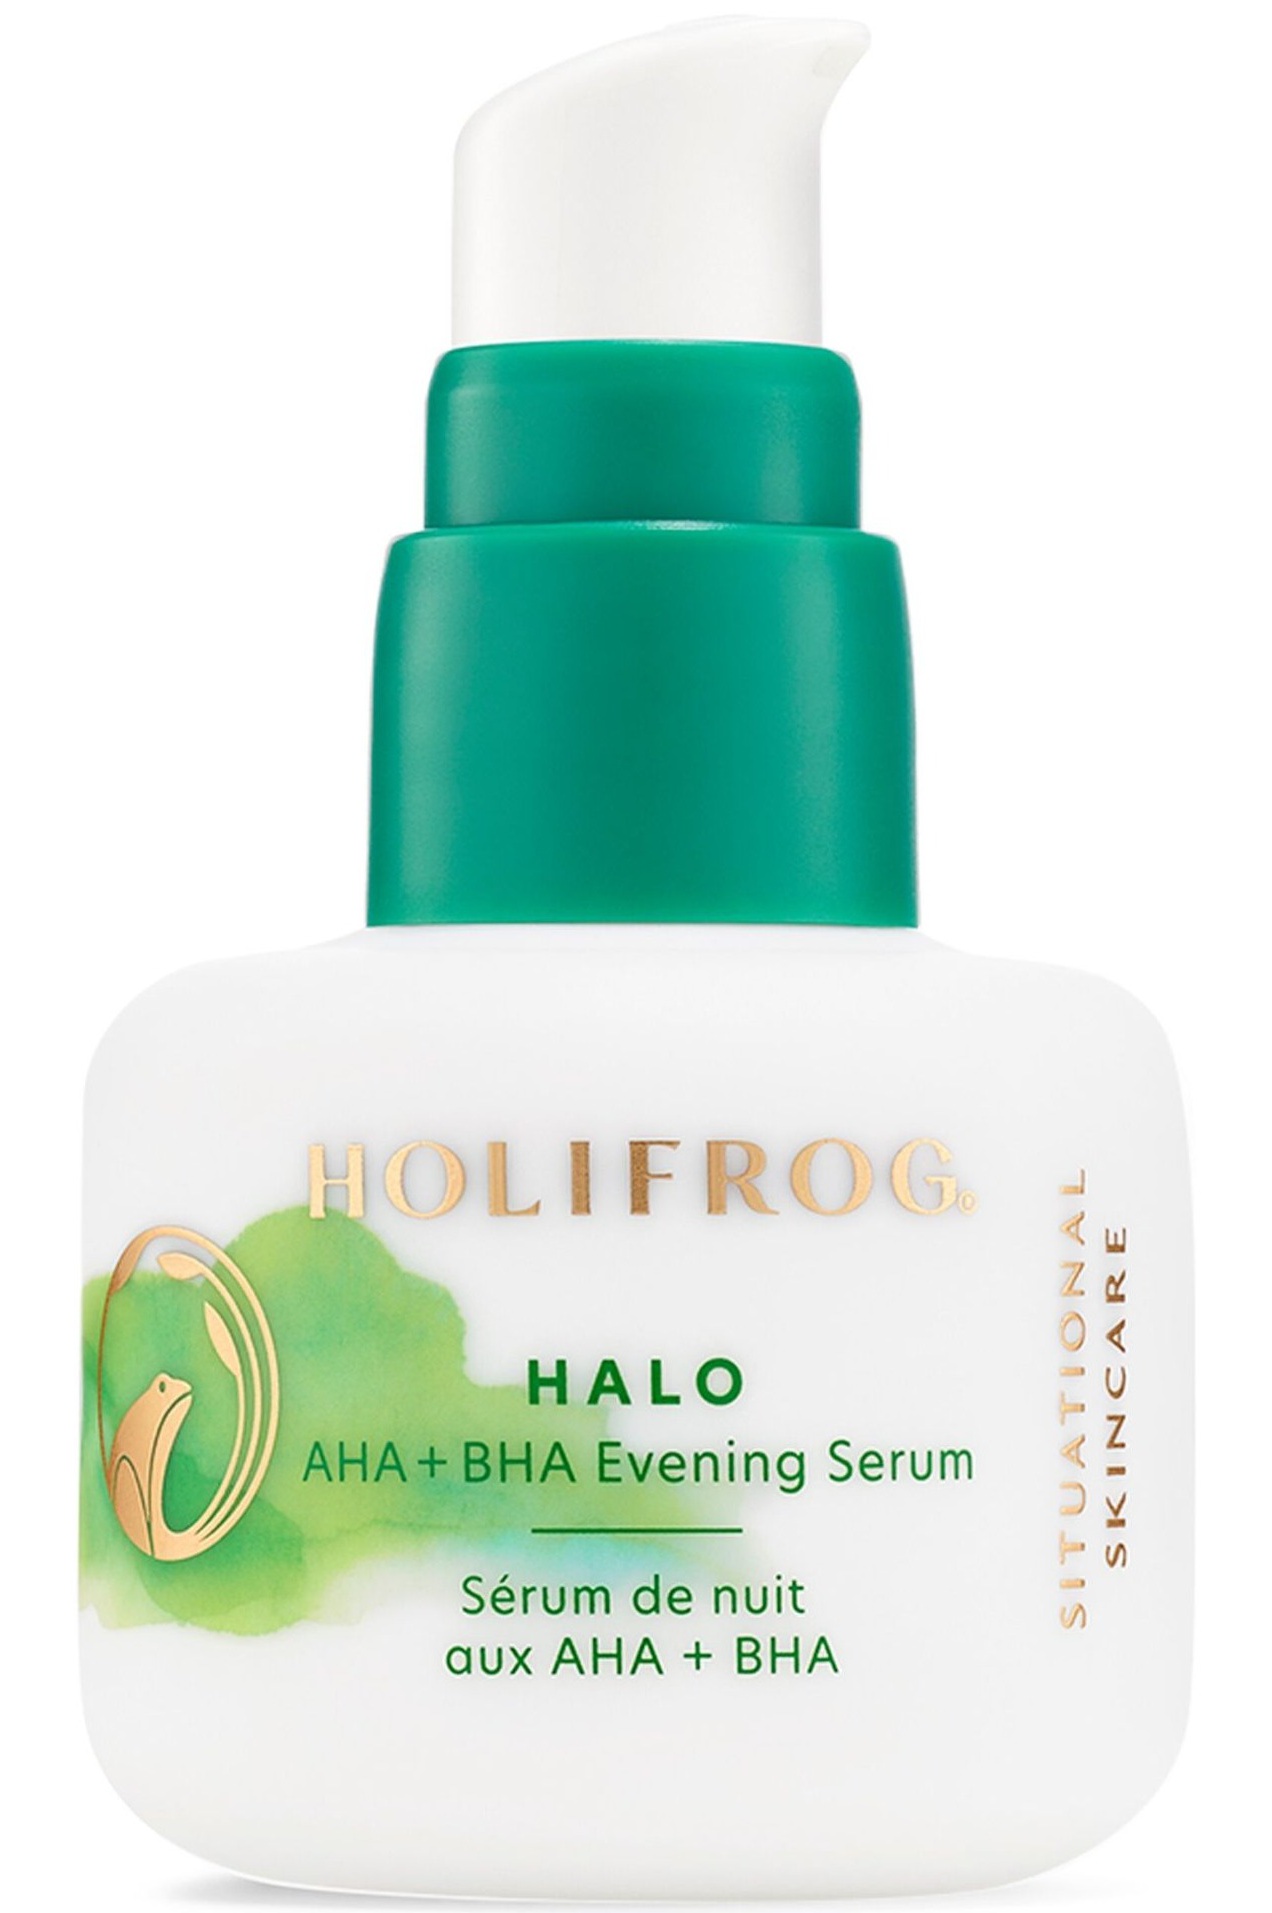 Holifrog Halo AHA + BHA Evening Serum